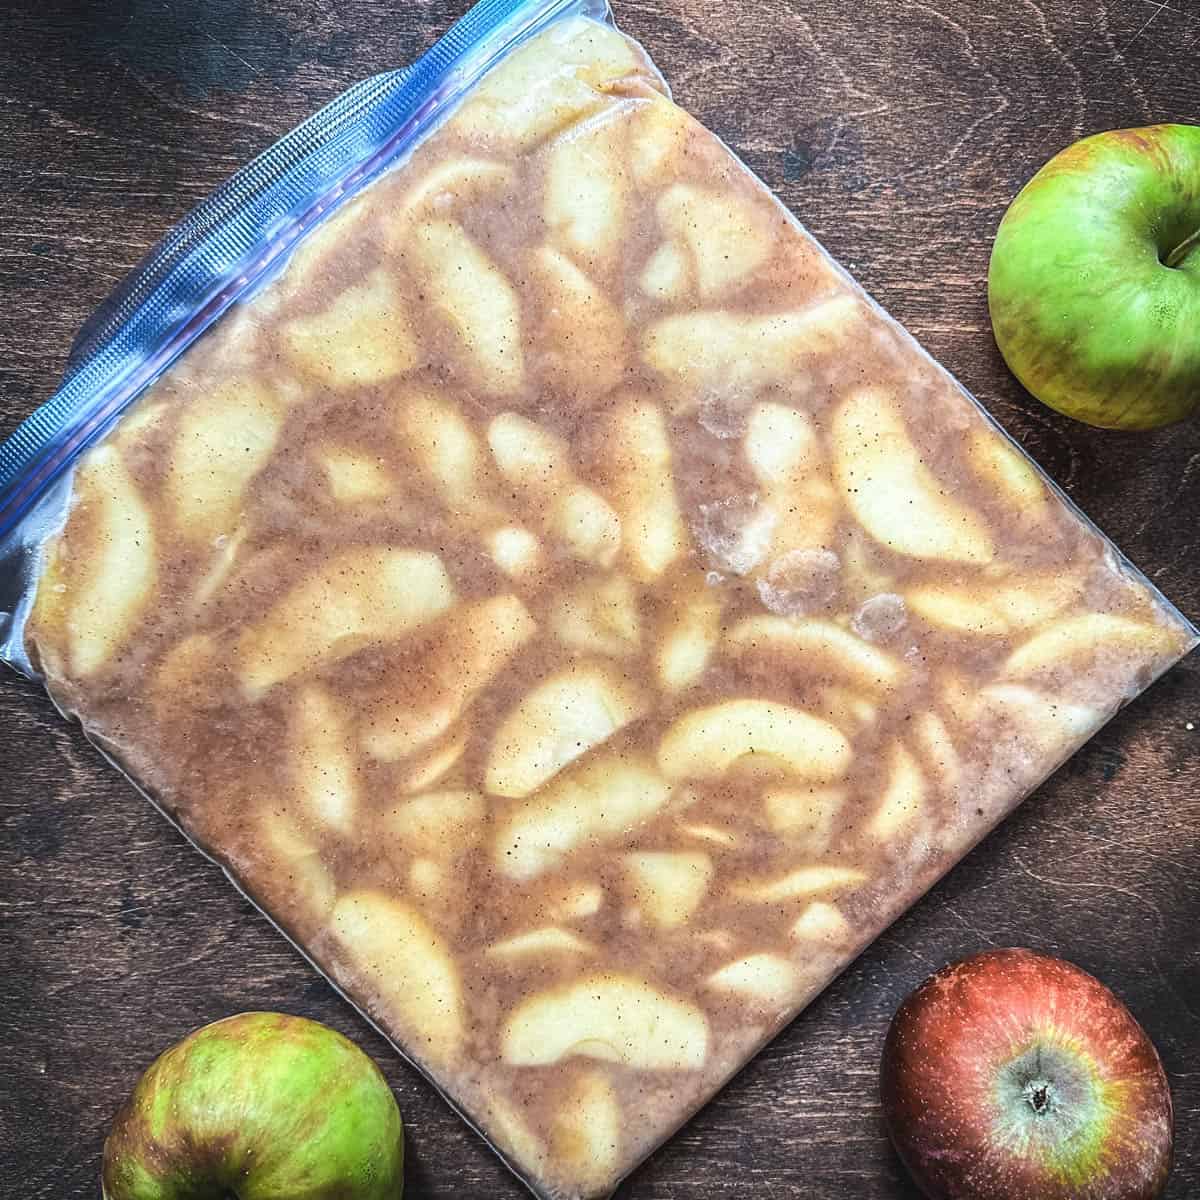 Freezing Apples for Pie Filling